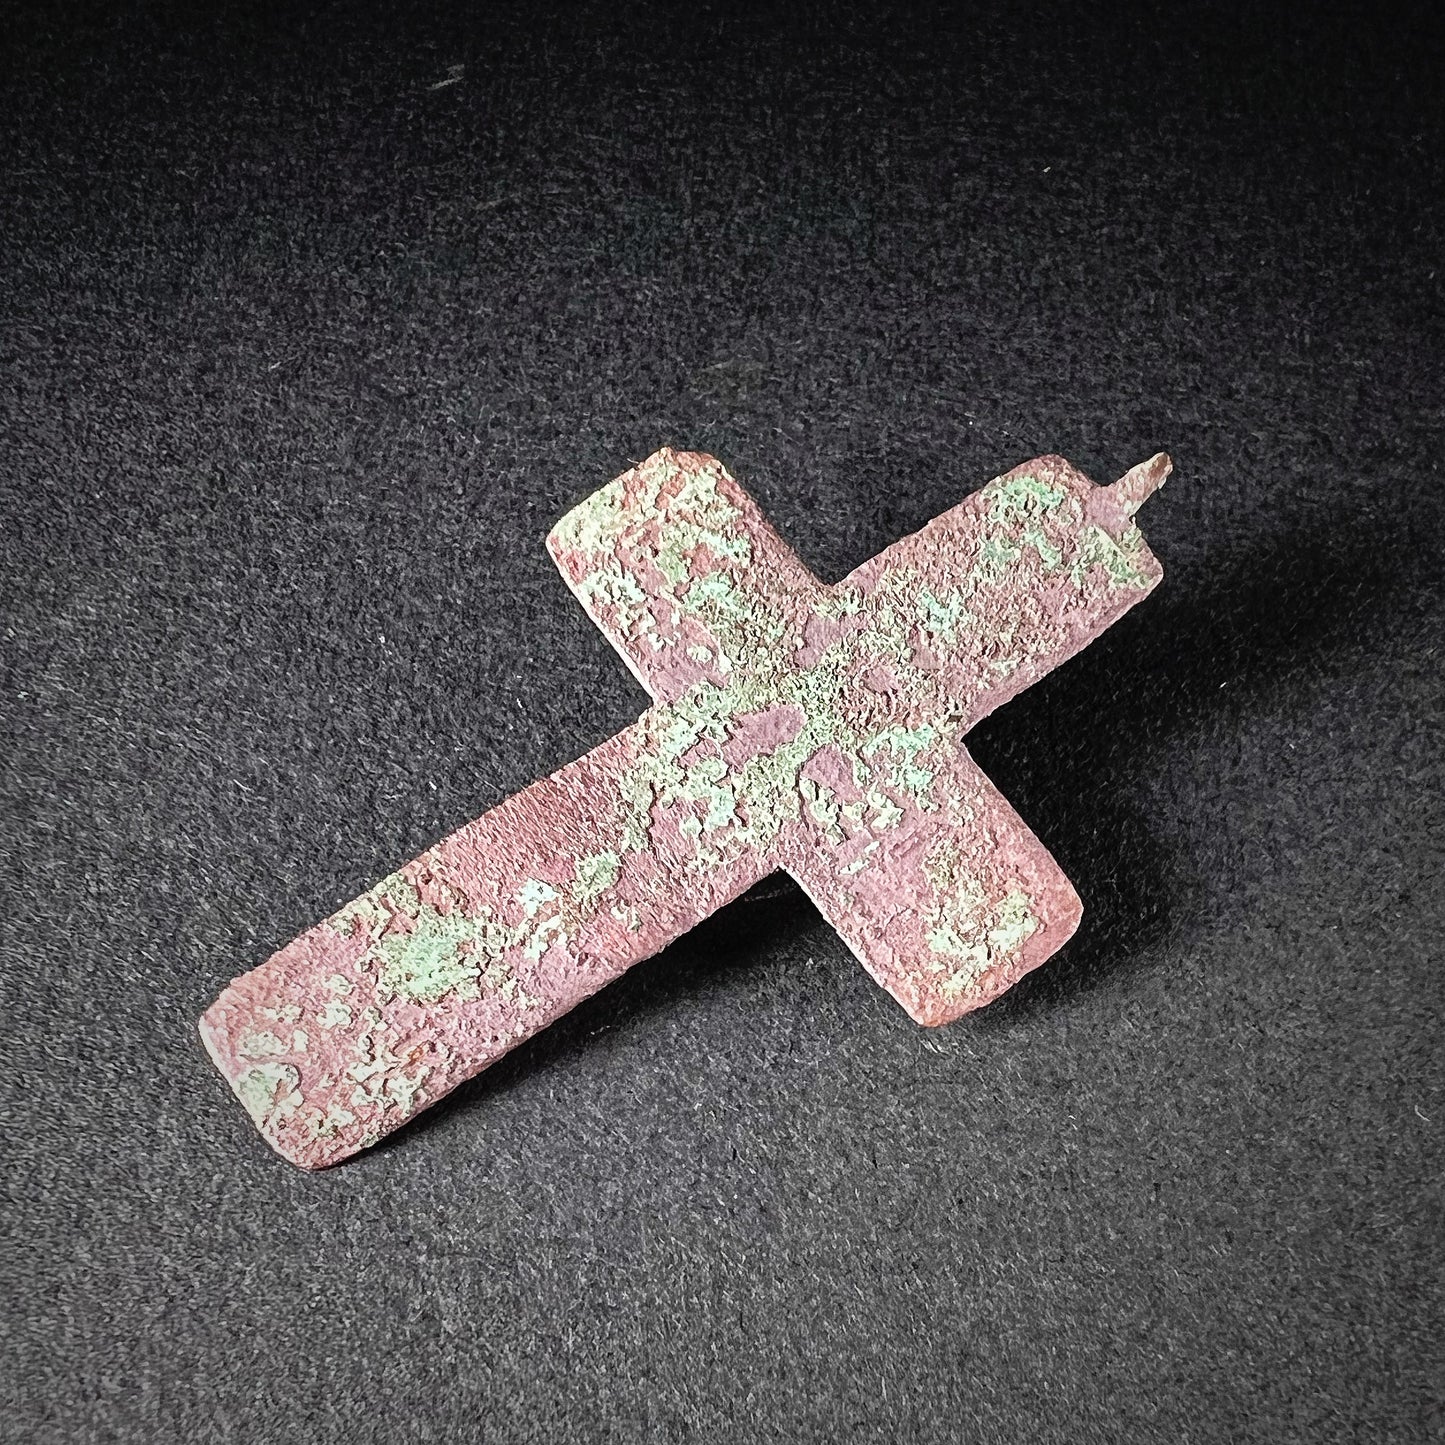 Bronze amulet - Slavic cross